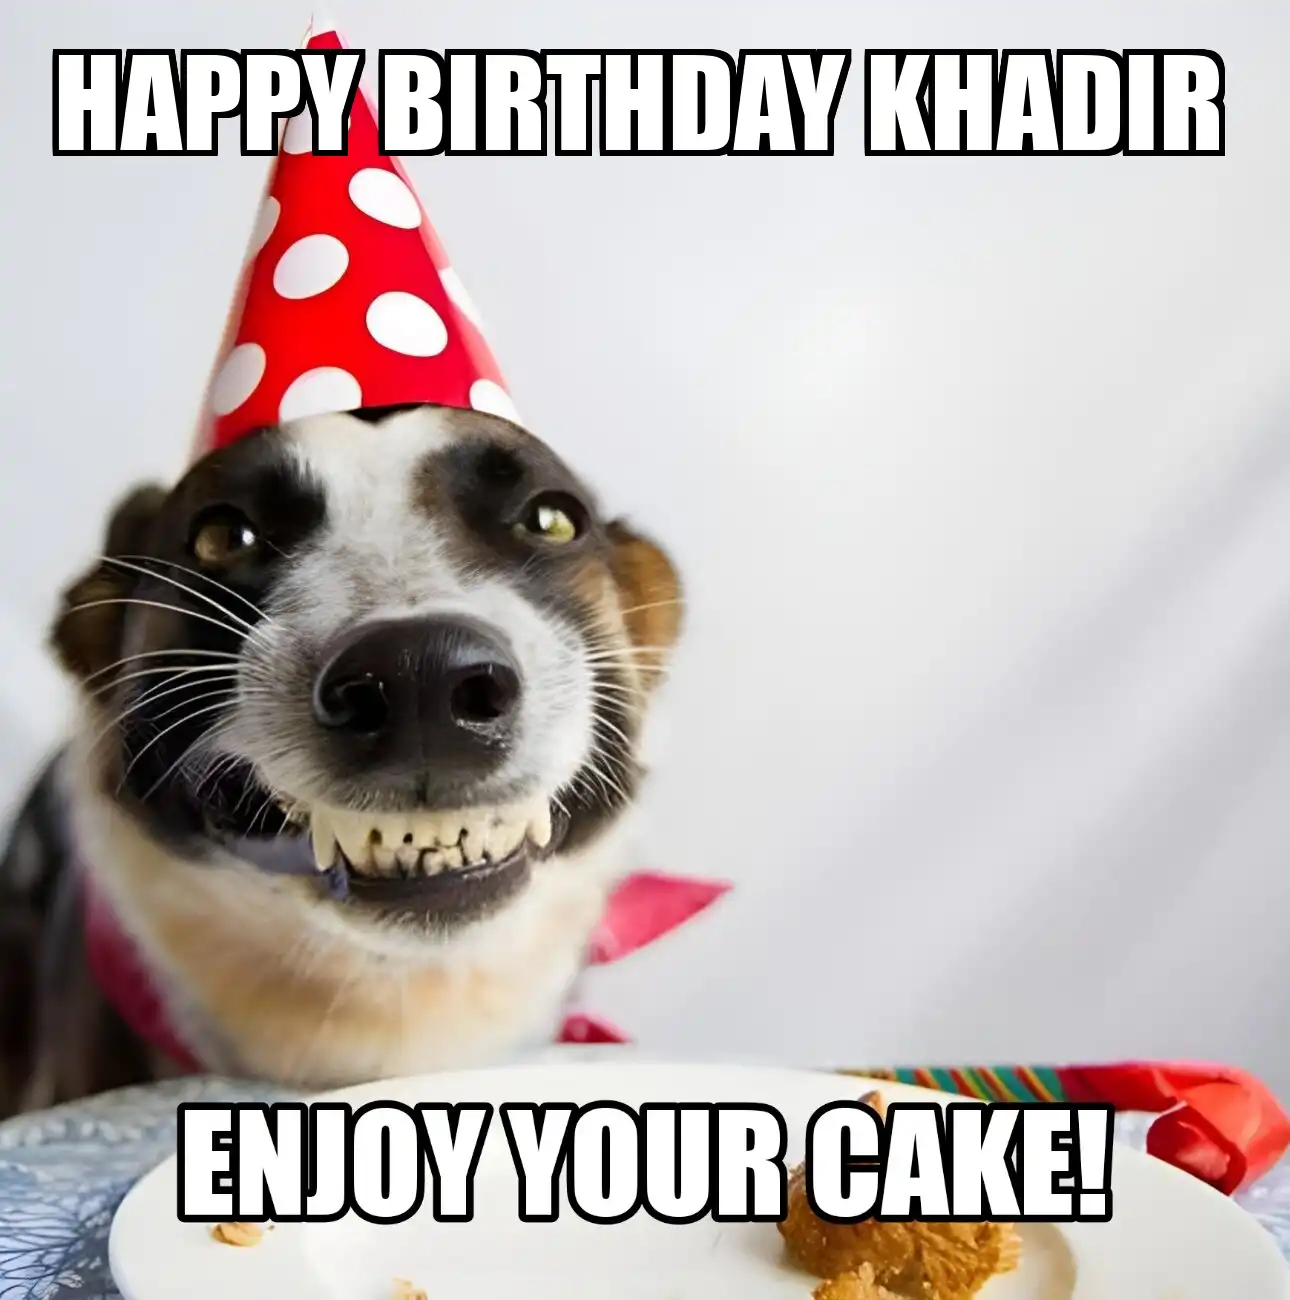 Happy Birthday Khadir Enjoy Your Cake Dog Meme